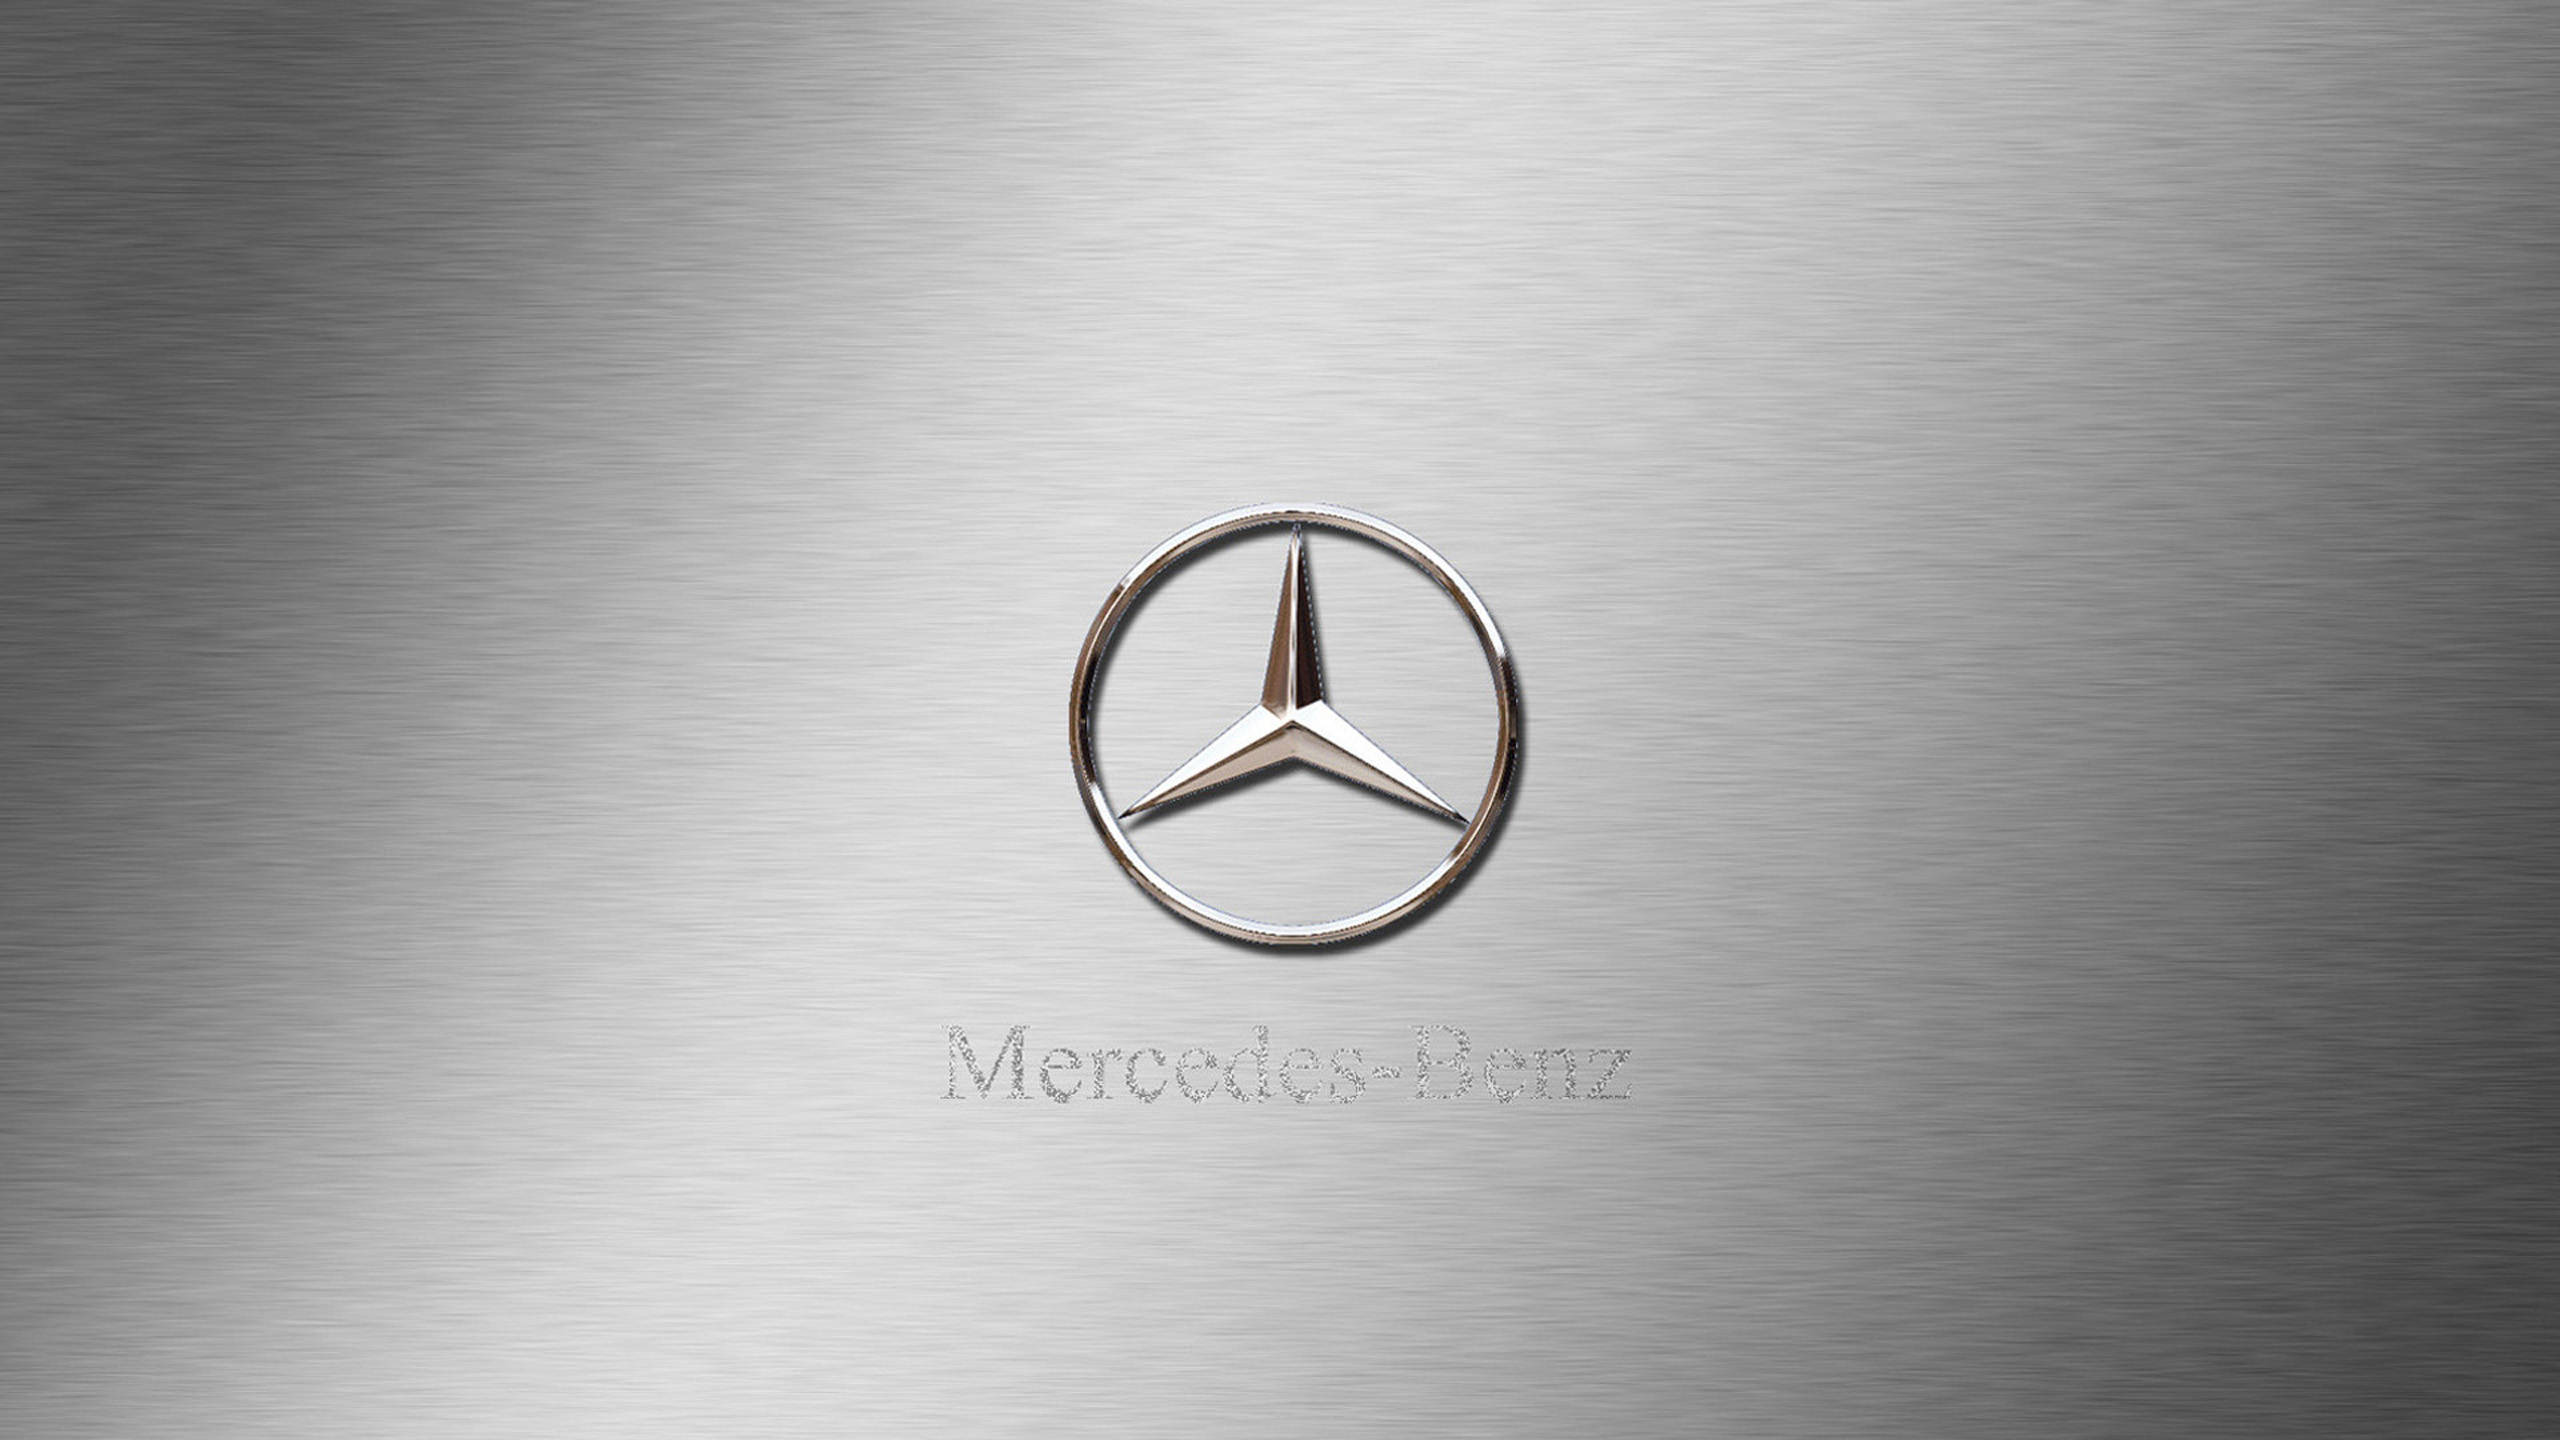 Daimler Ag, Mercedes-Benz SLR McLaren, Auto, Firmenzeichen, Kreis. Wallpaper in 2560x1440 Resolution